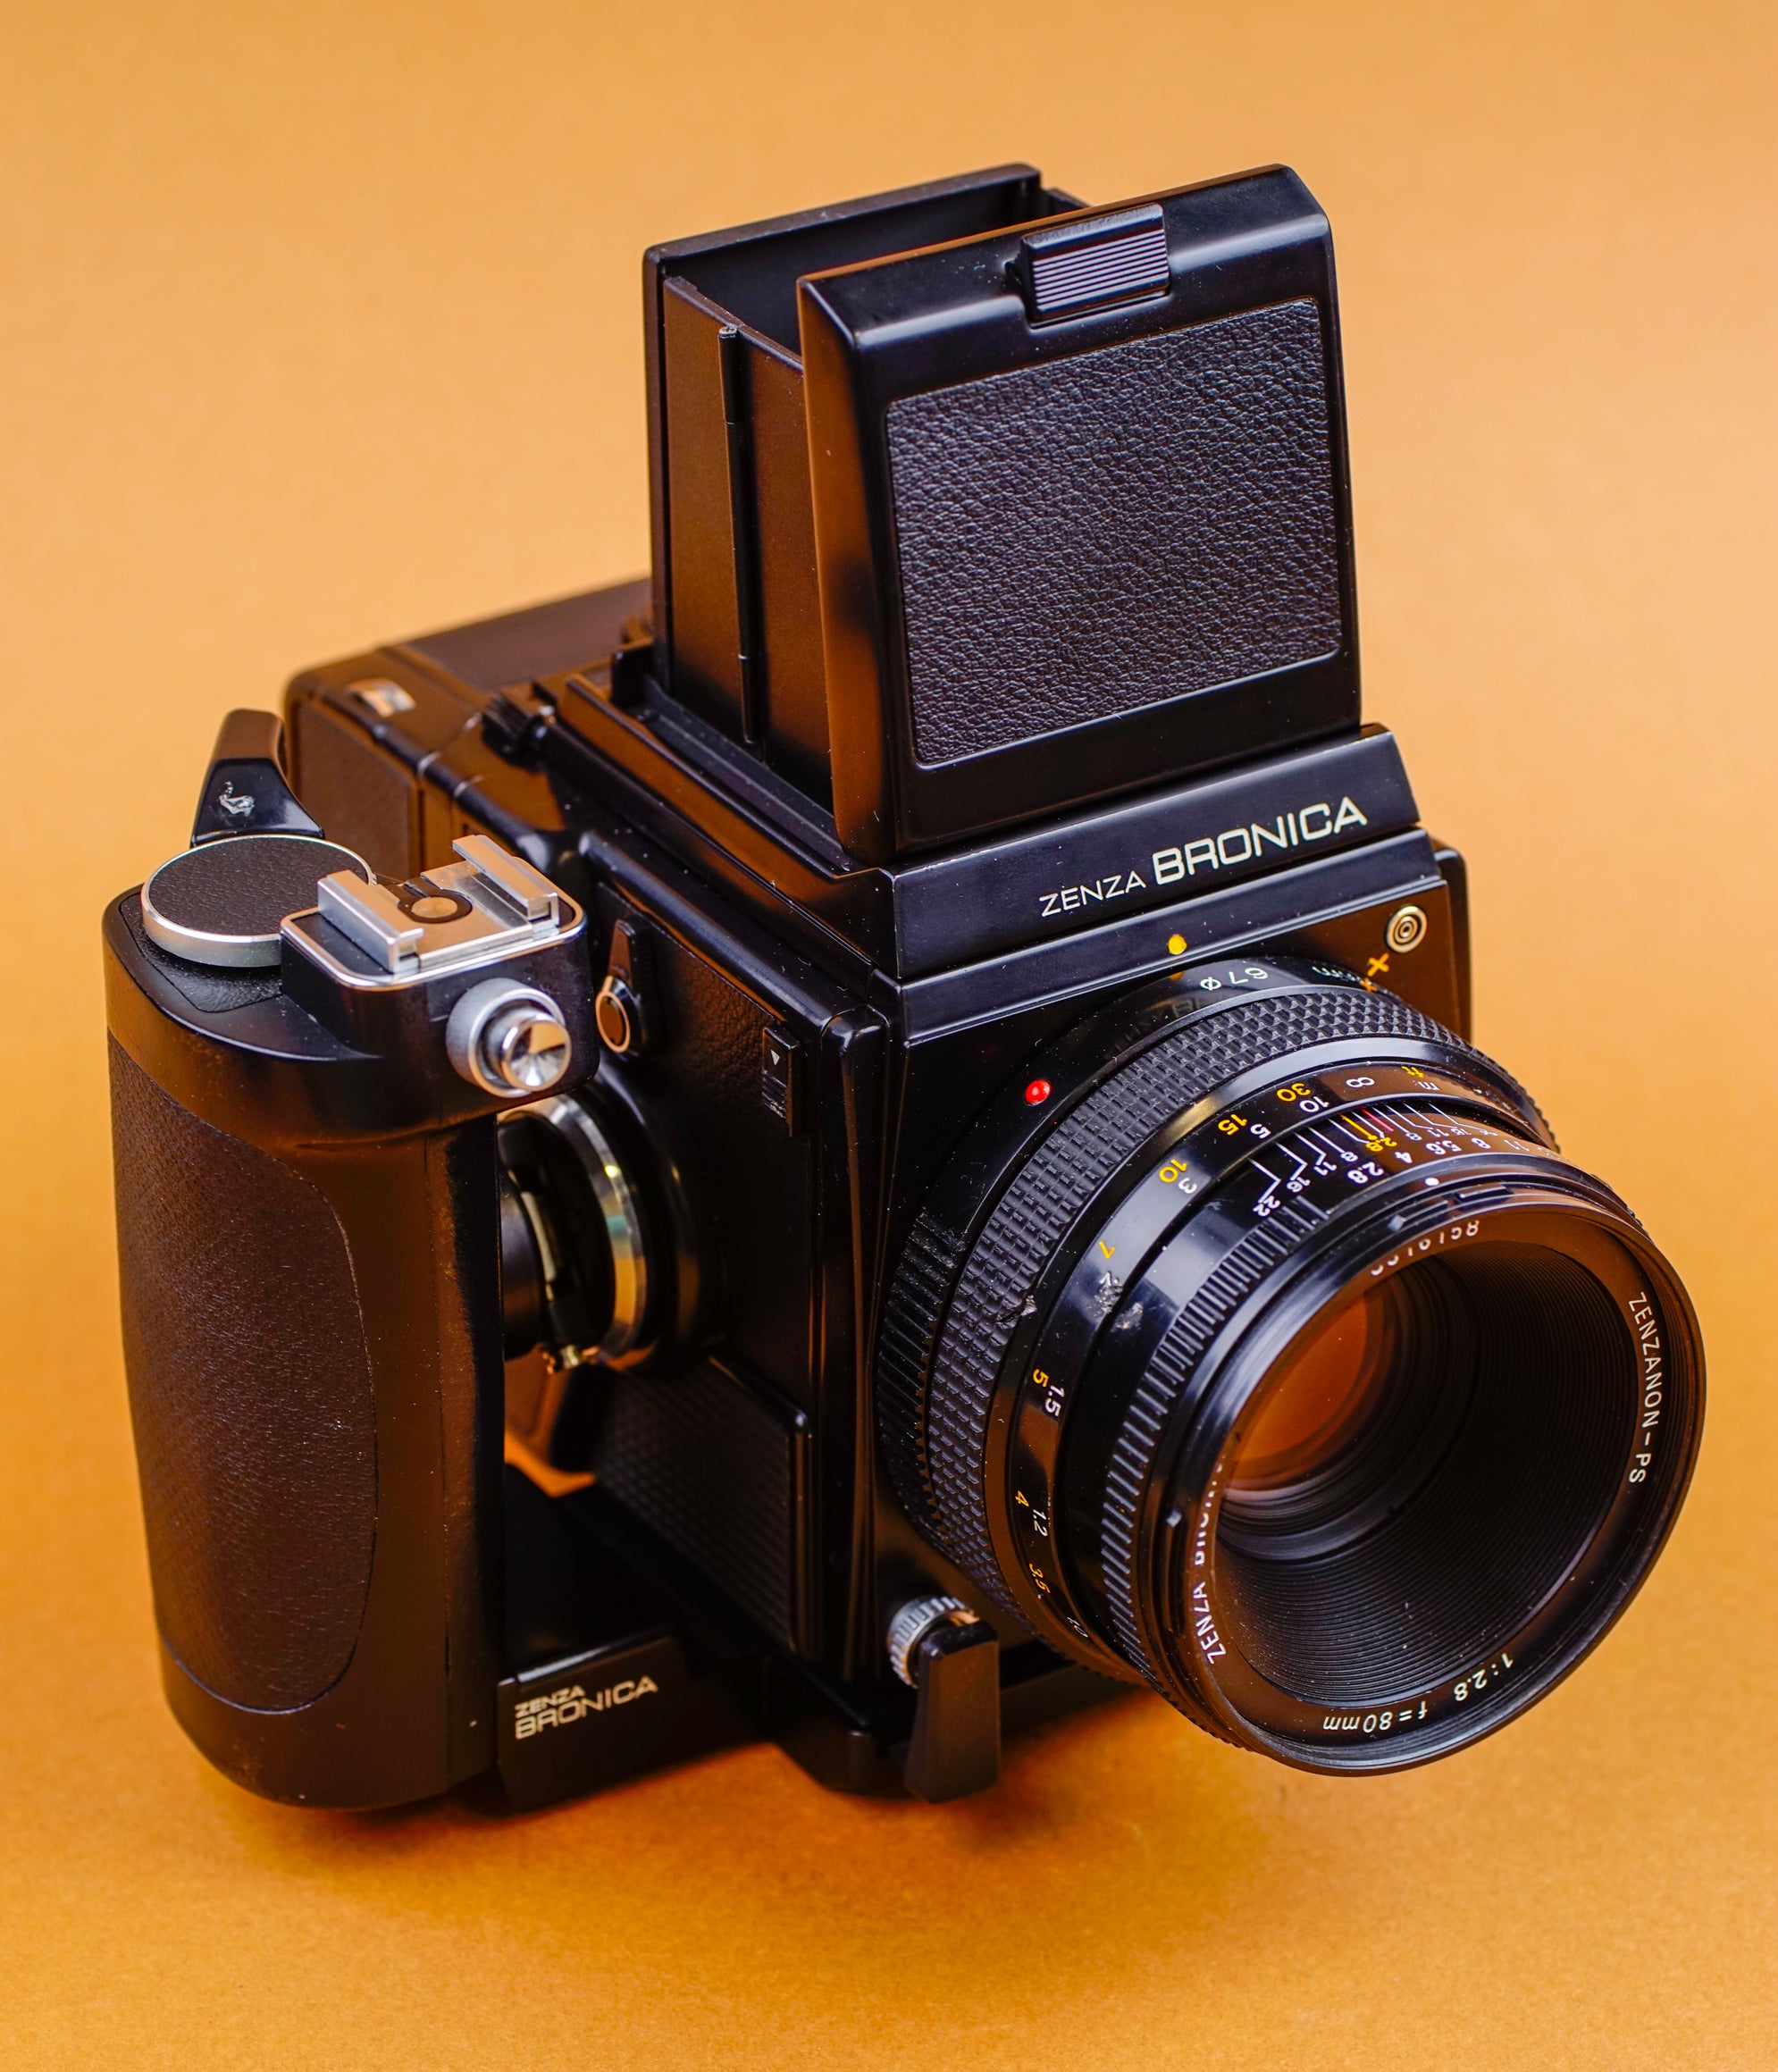 Zenza Bronica SQ Cameras, Lenses, & More – Shop Our Selection